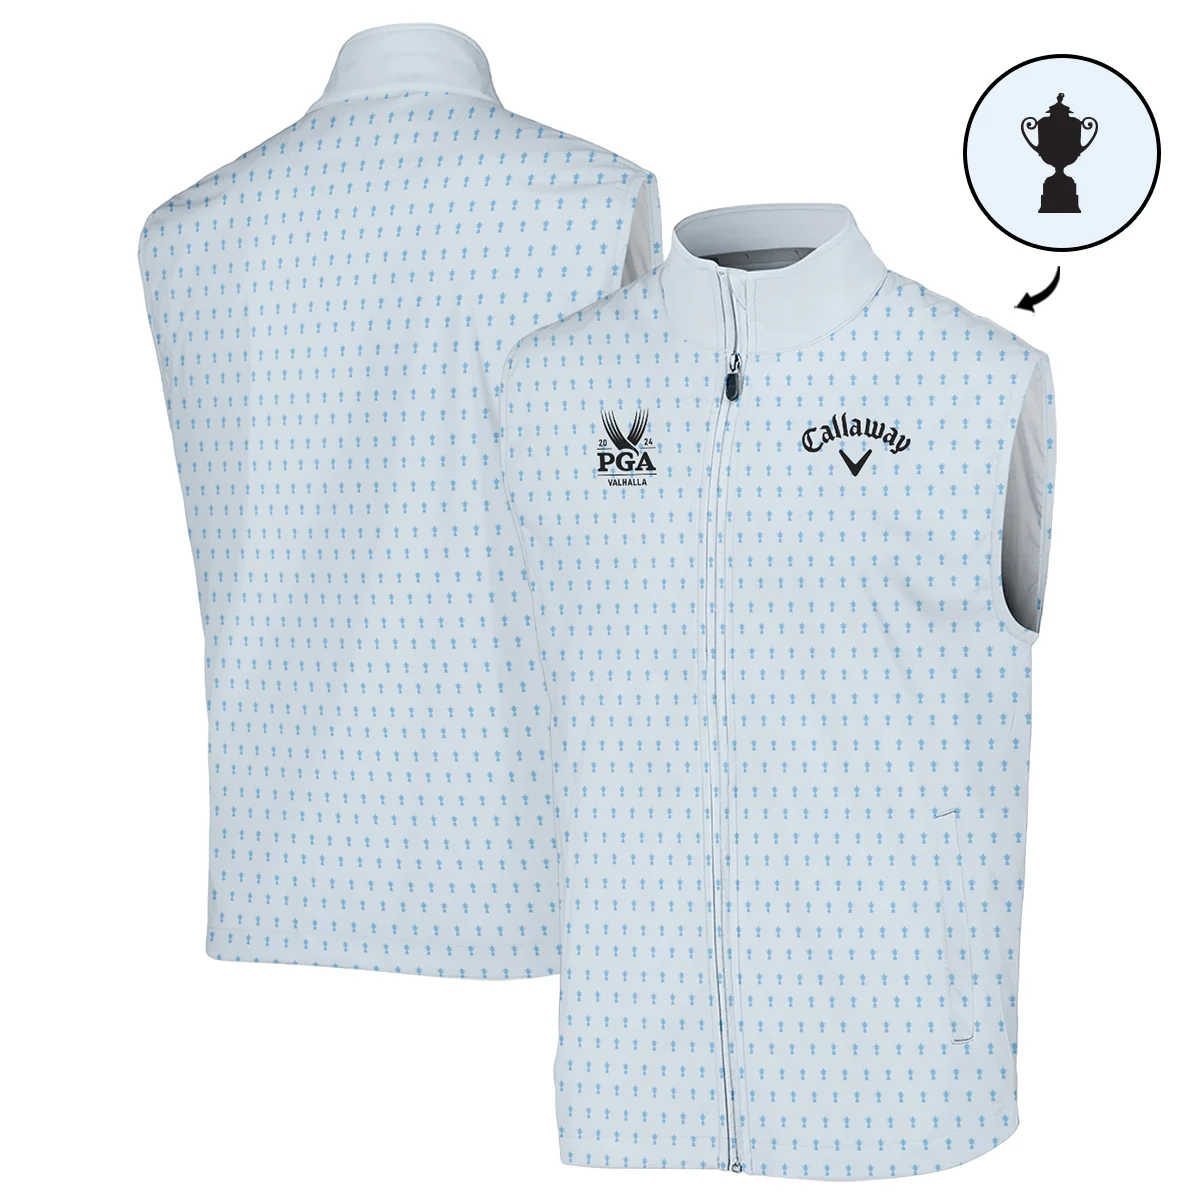 PGA Championship Valhalla Sports Callaway Sleeveless Jacket Cup Pattern Light Blue Pastel All Over Print Sleeveless Jacket